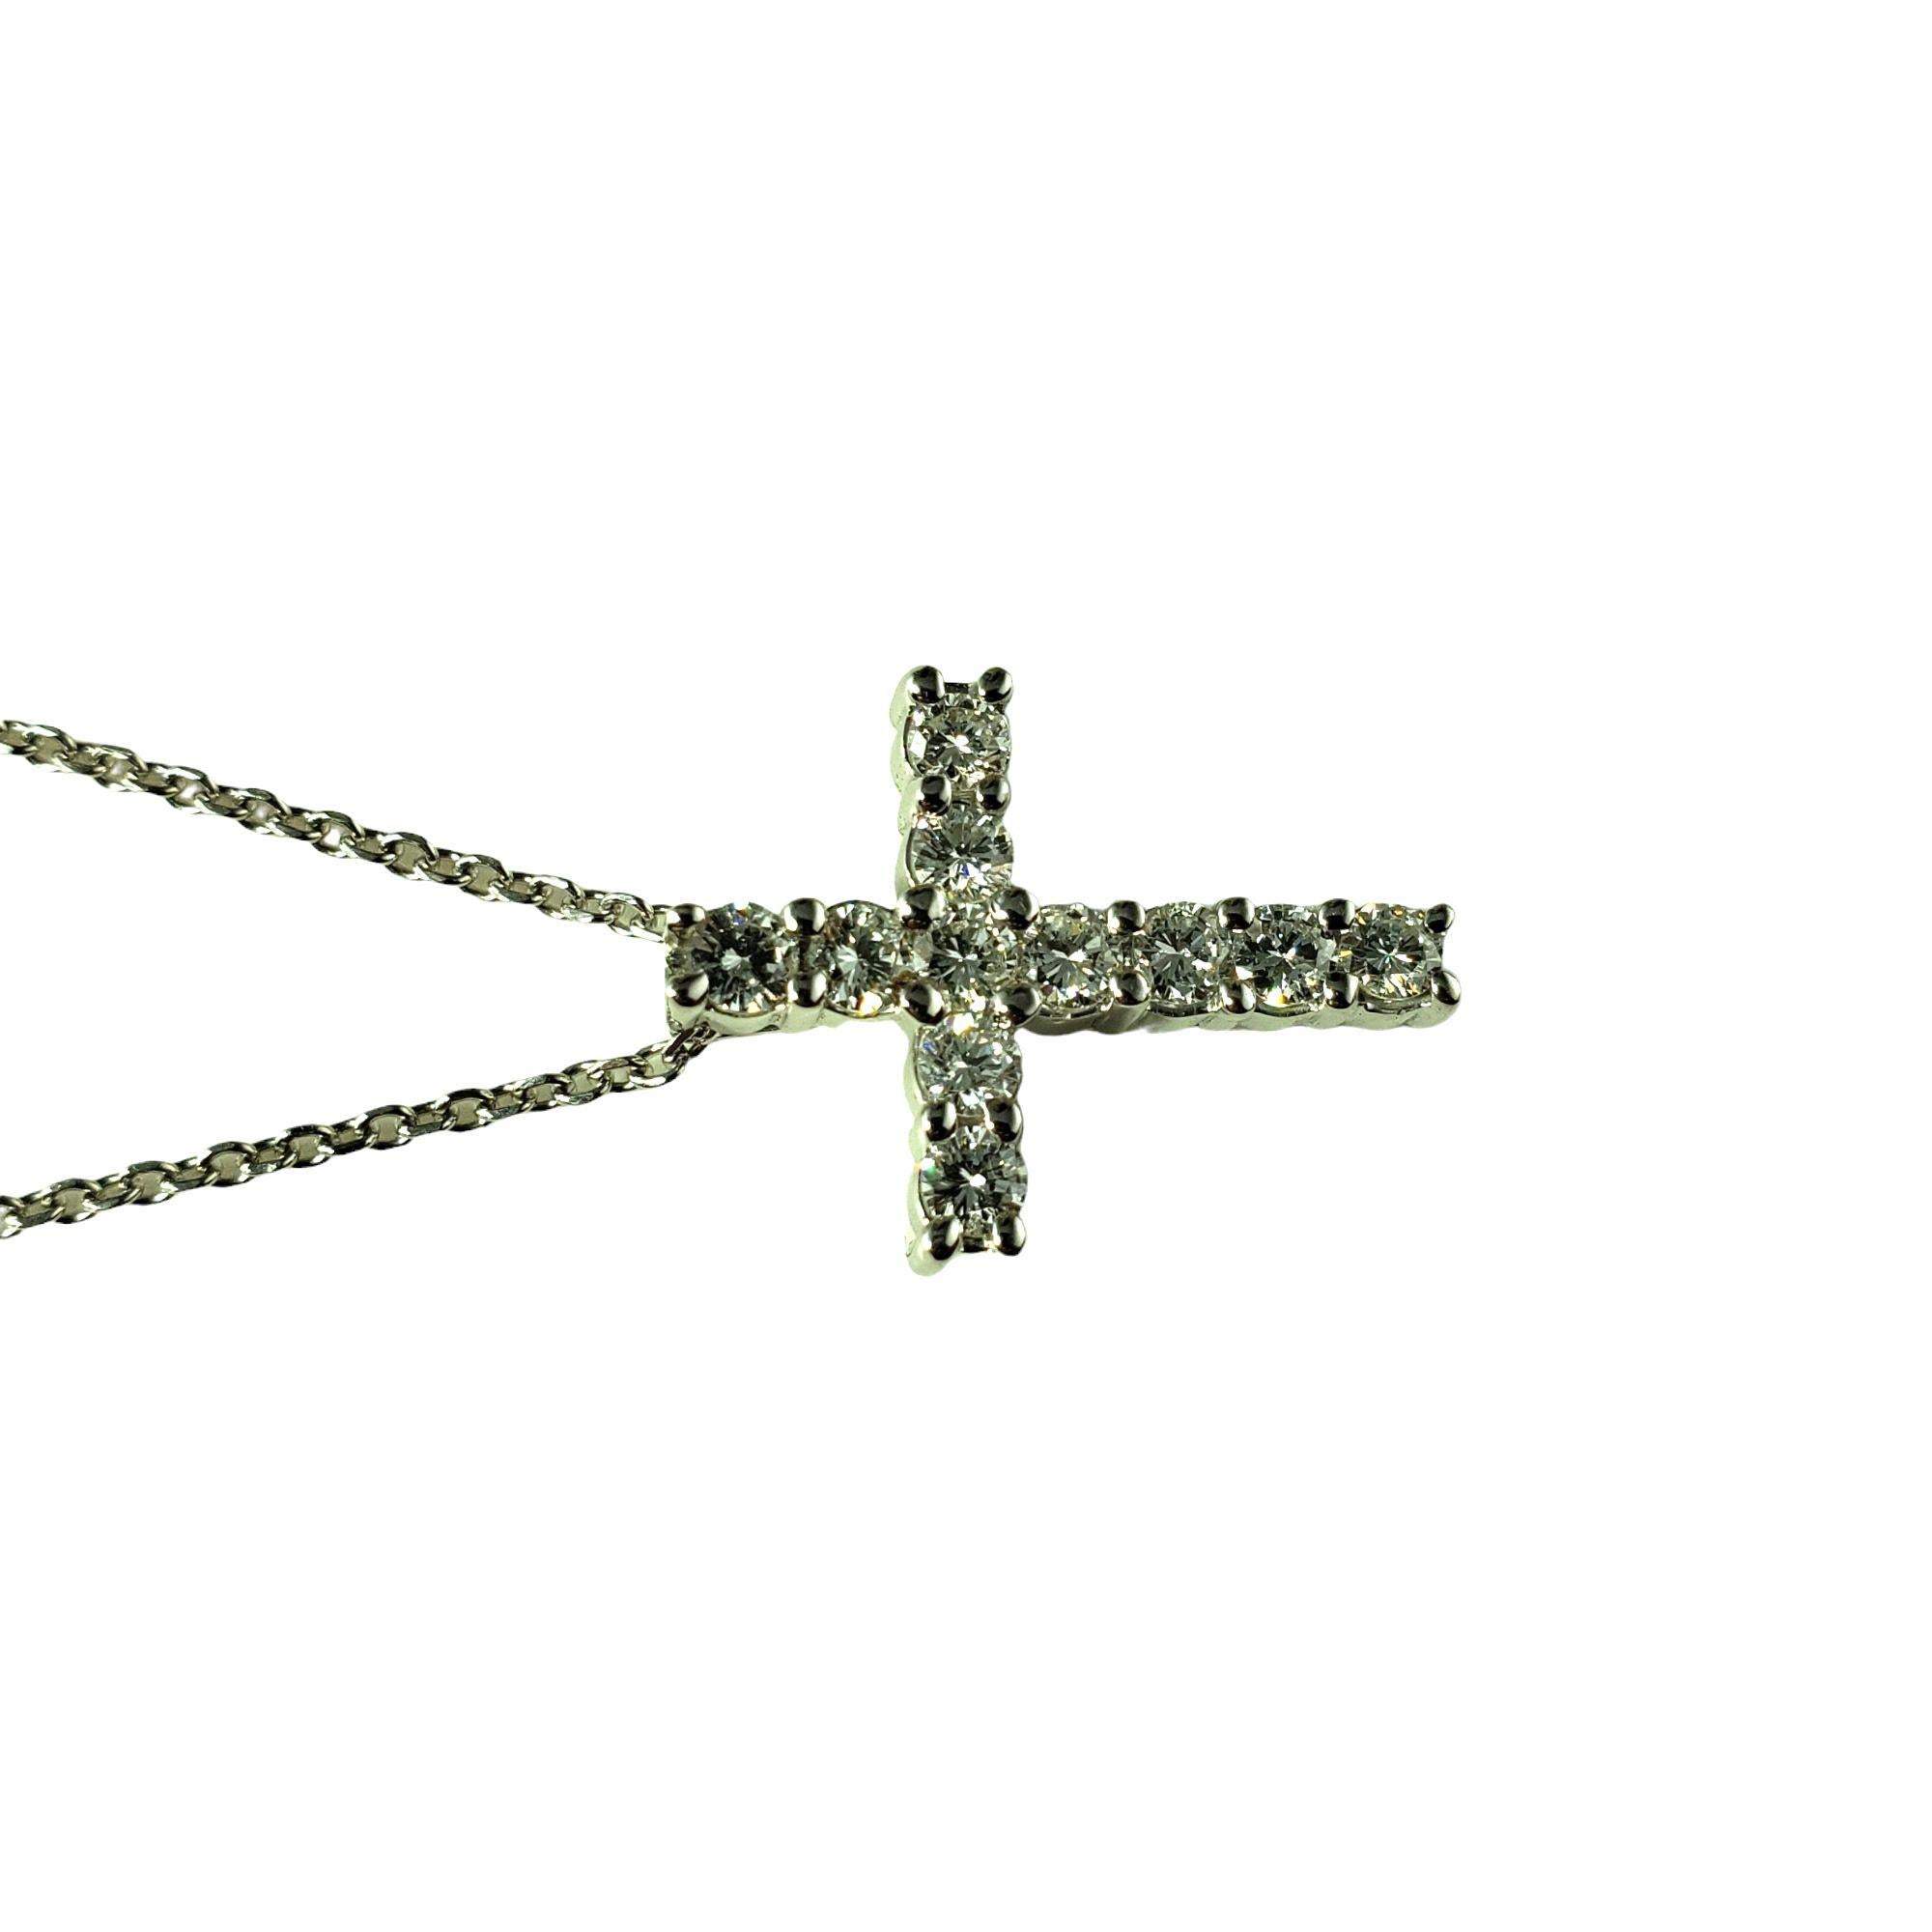 Brilliant Cut 14 Karat White Gold and Diamond Cross Pendant Necklace #14889 For Sale